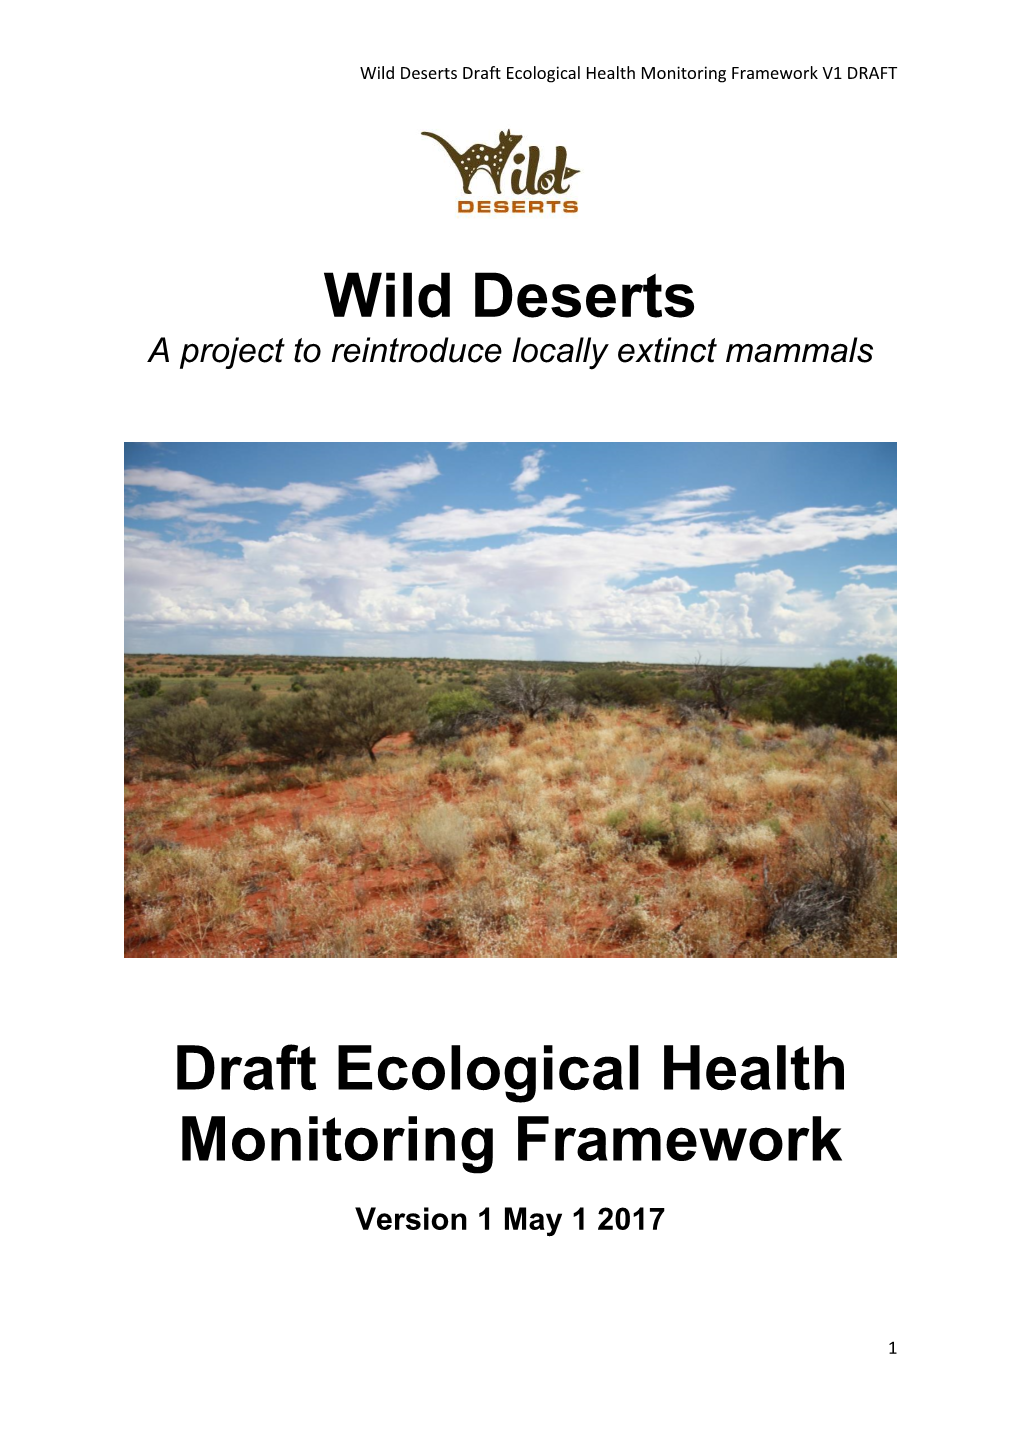 Draft Ecological Health Monitoring Framework V1 DRAFT